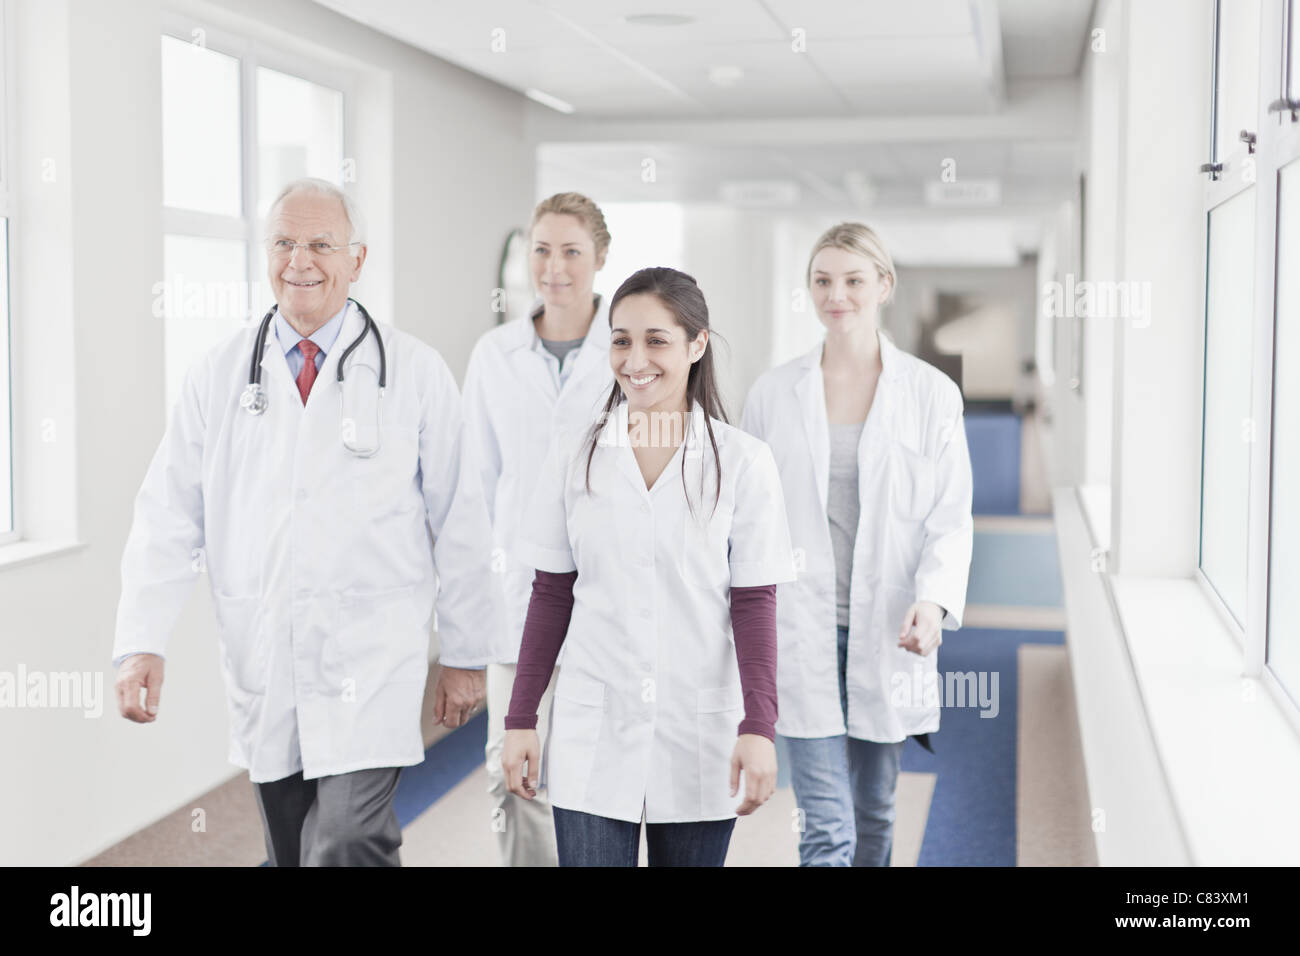 Doctors and nurses walking in hospital Stock Photo